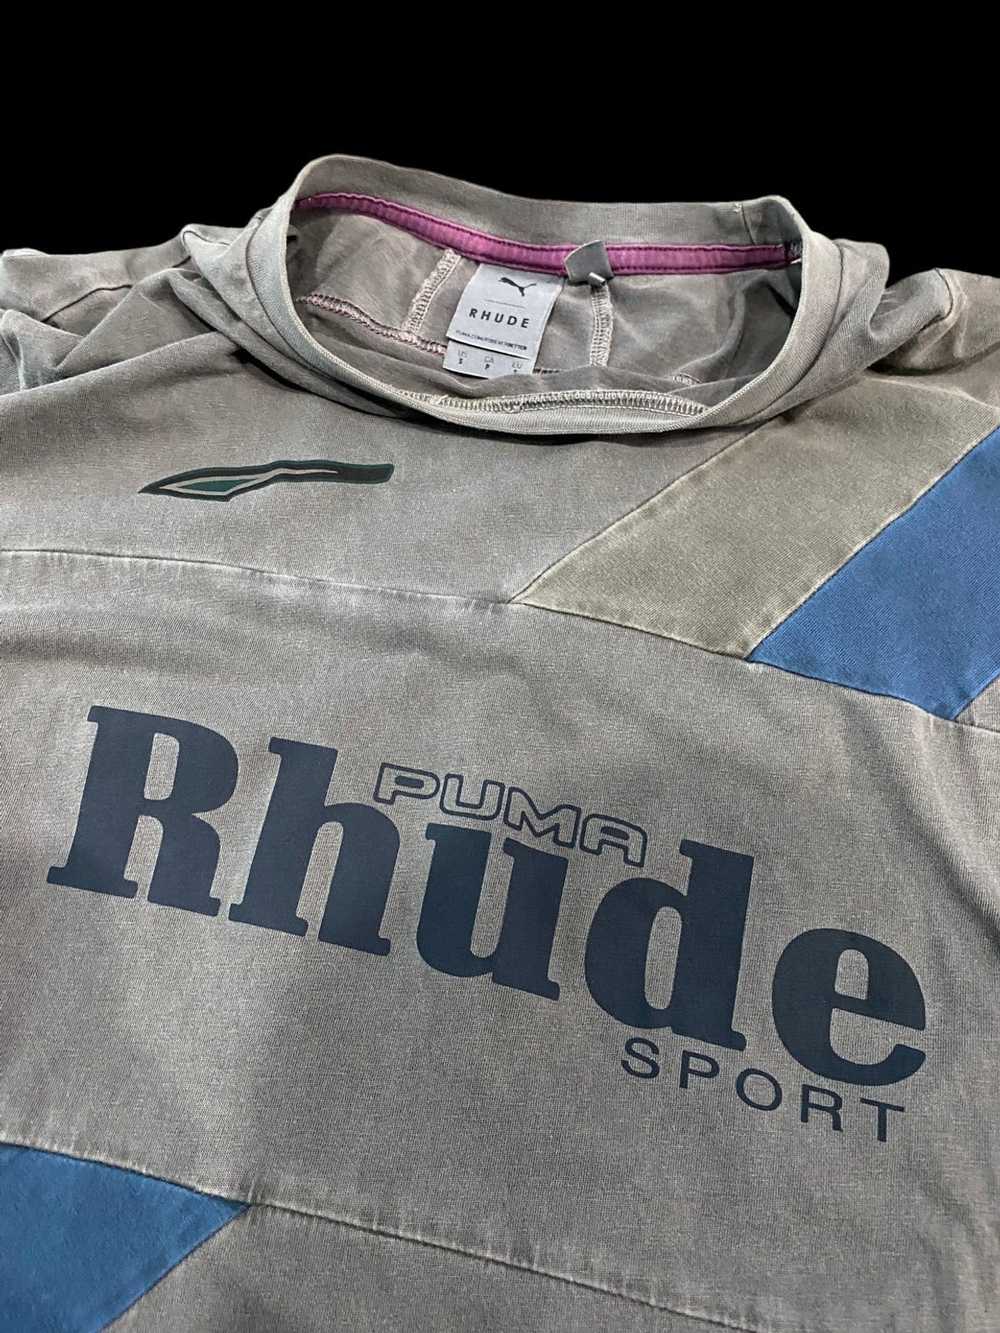 Puma × Rhude Rude x Puma Logo T-Shirt size Small - image 3